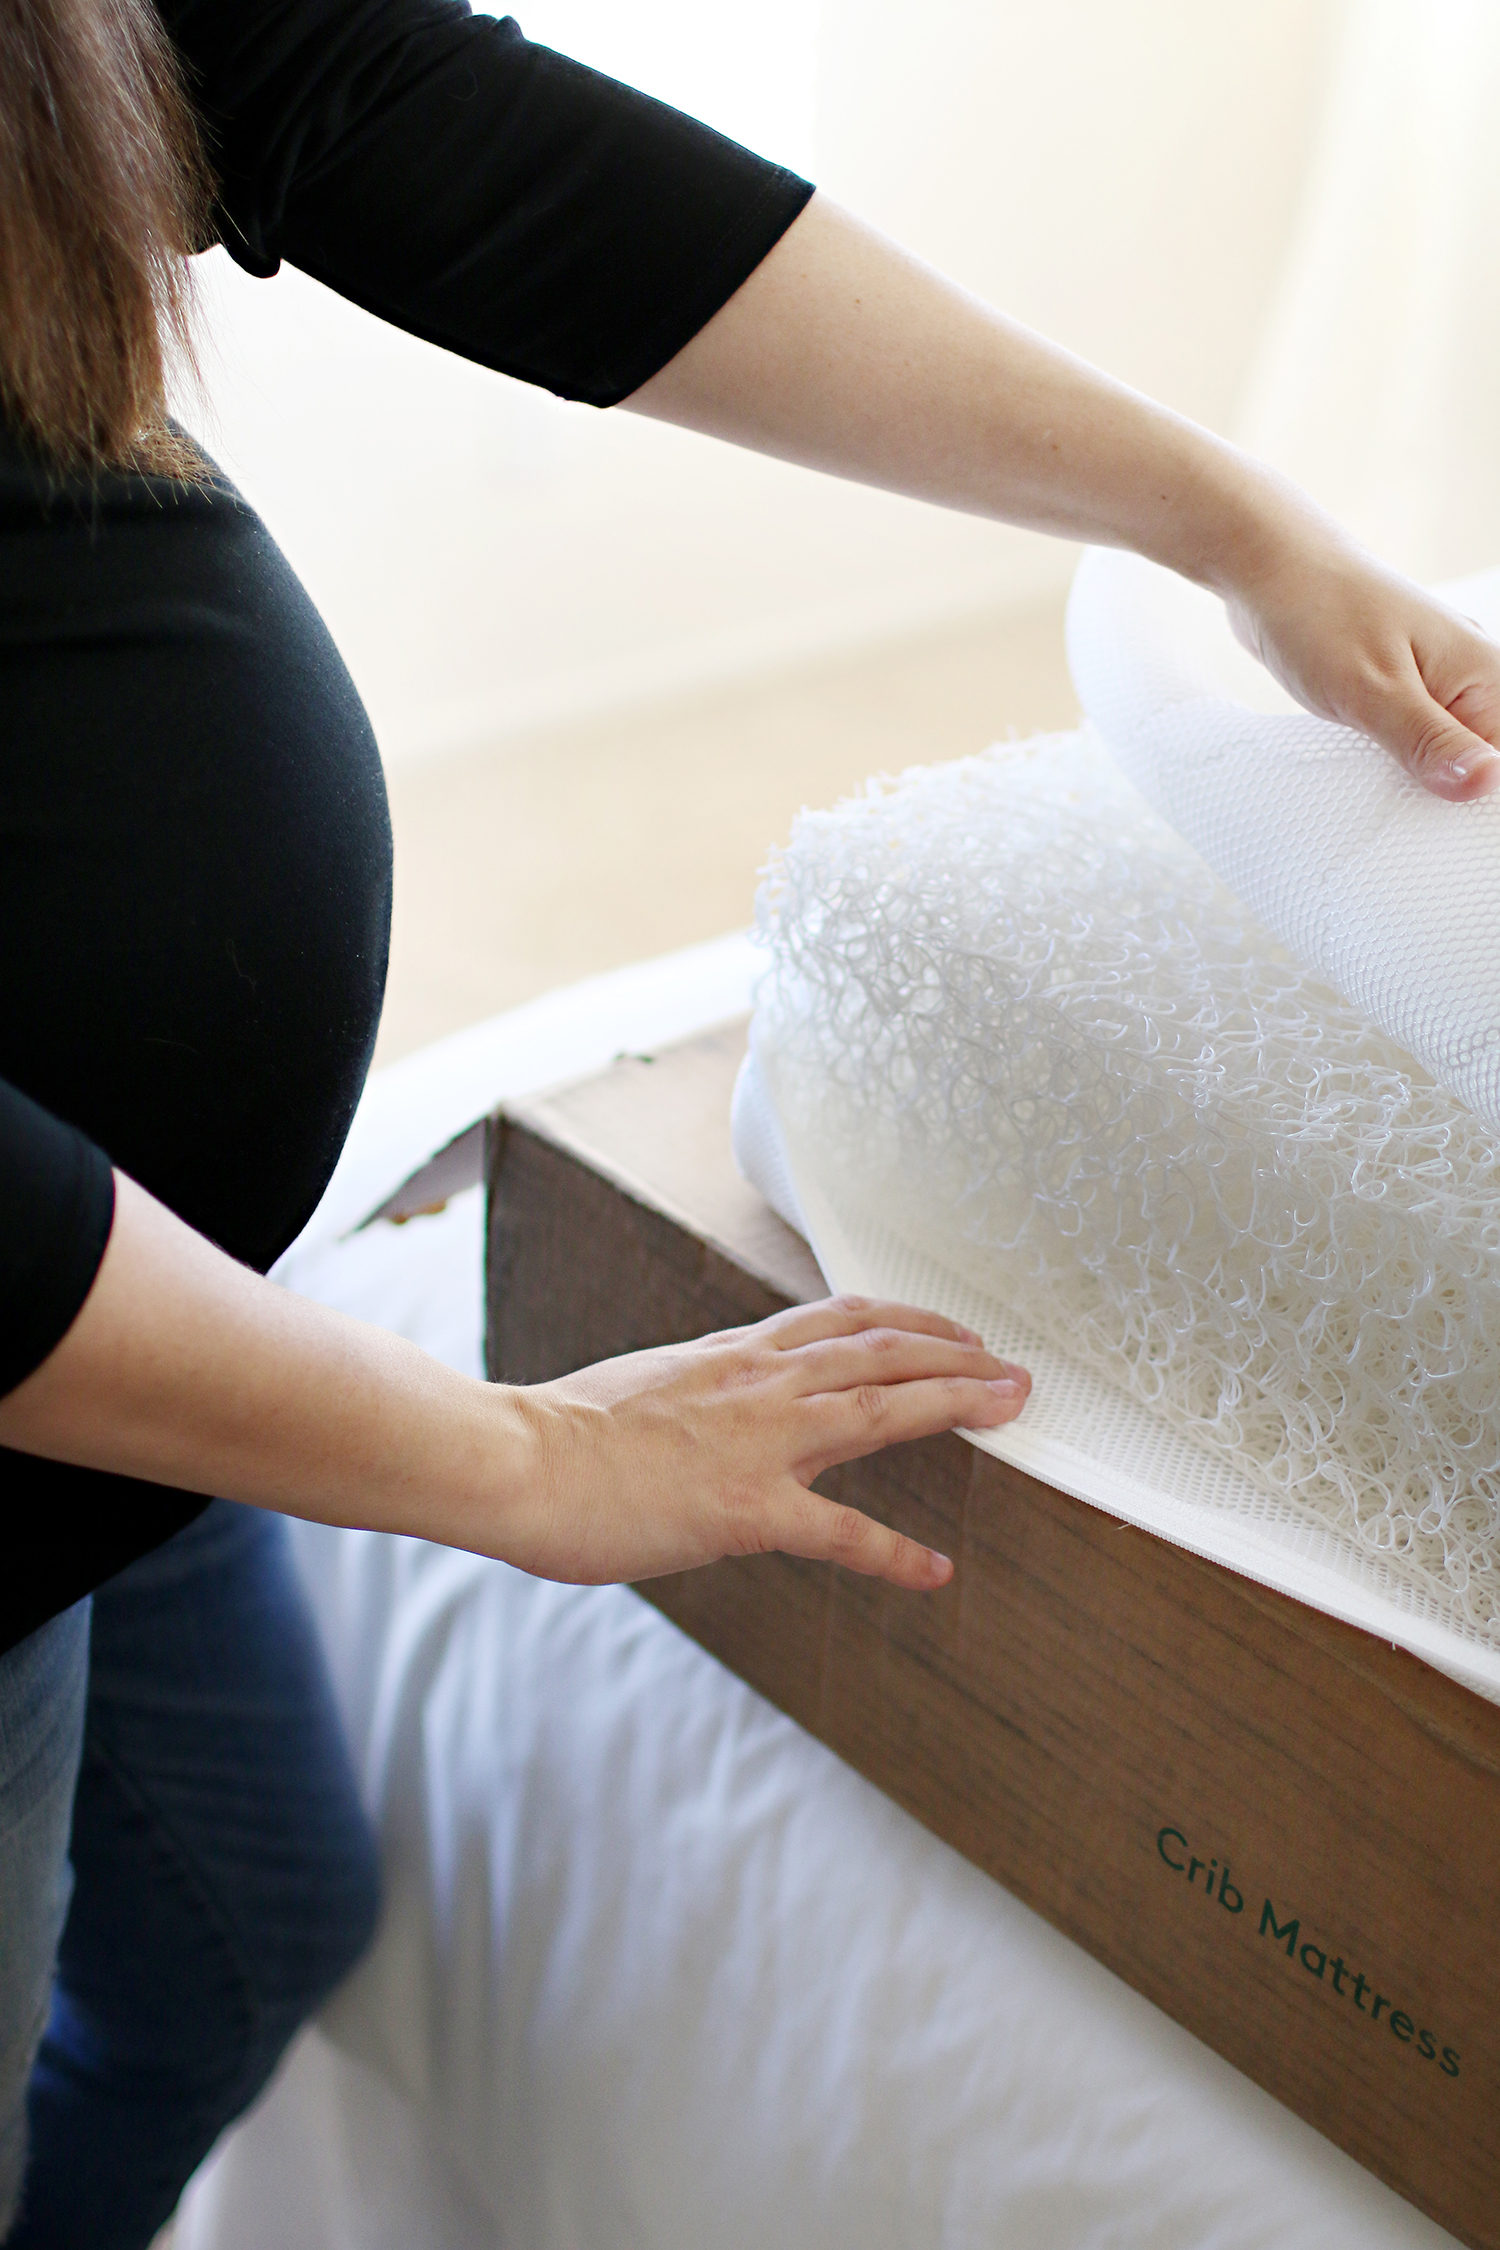 Prepping for Baby with Newton Baby Wovenair Crib Mattress | HausOfLayne.com #Baby #Pregnancy #Motherhood #BabyProducts